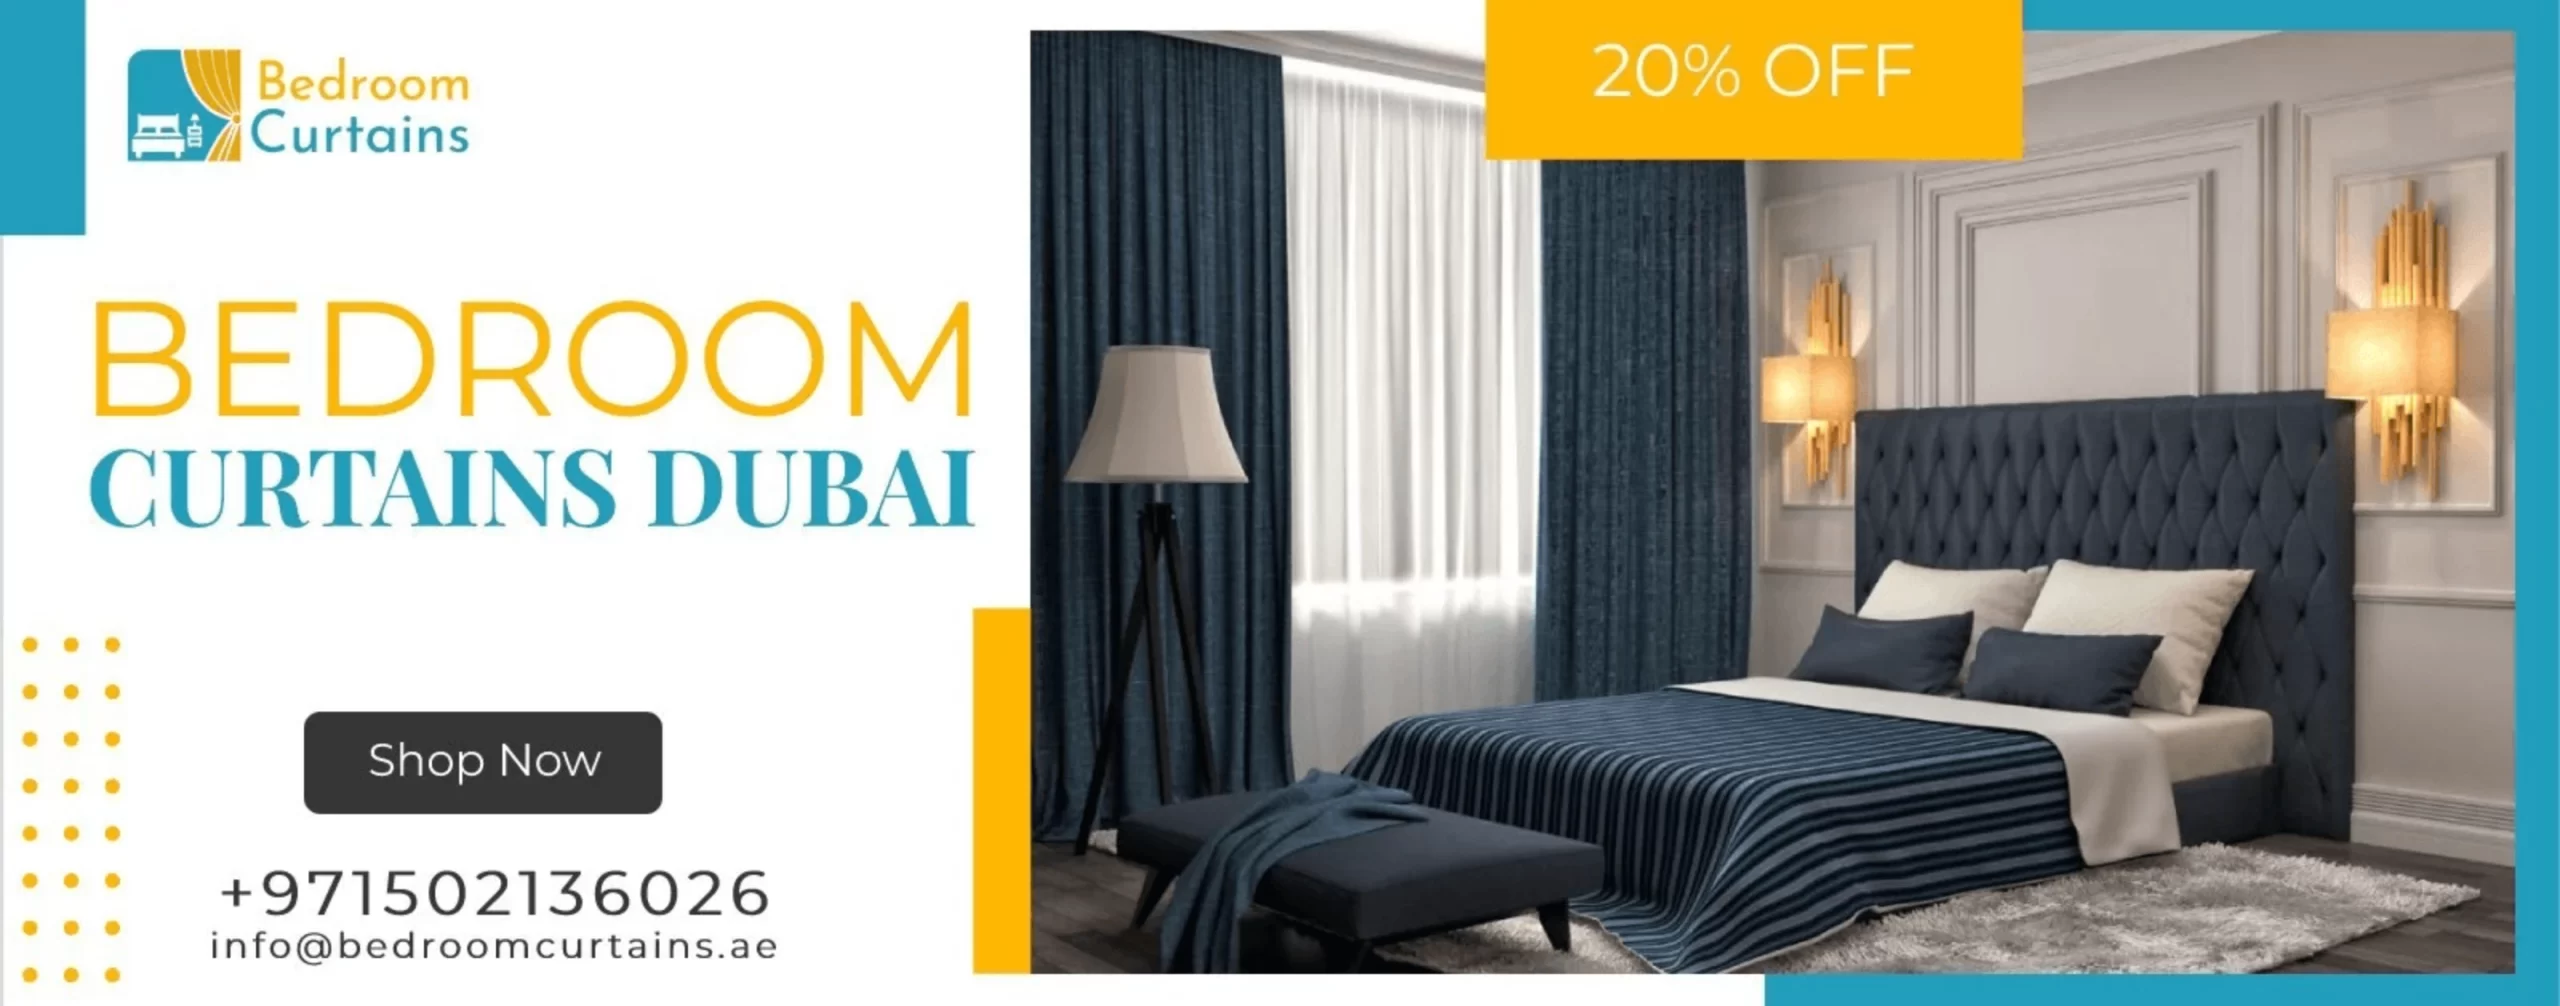 Bedroom Curtains Dubai Contact Details